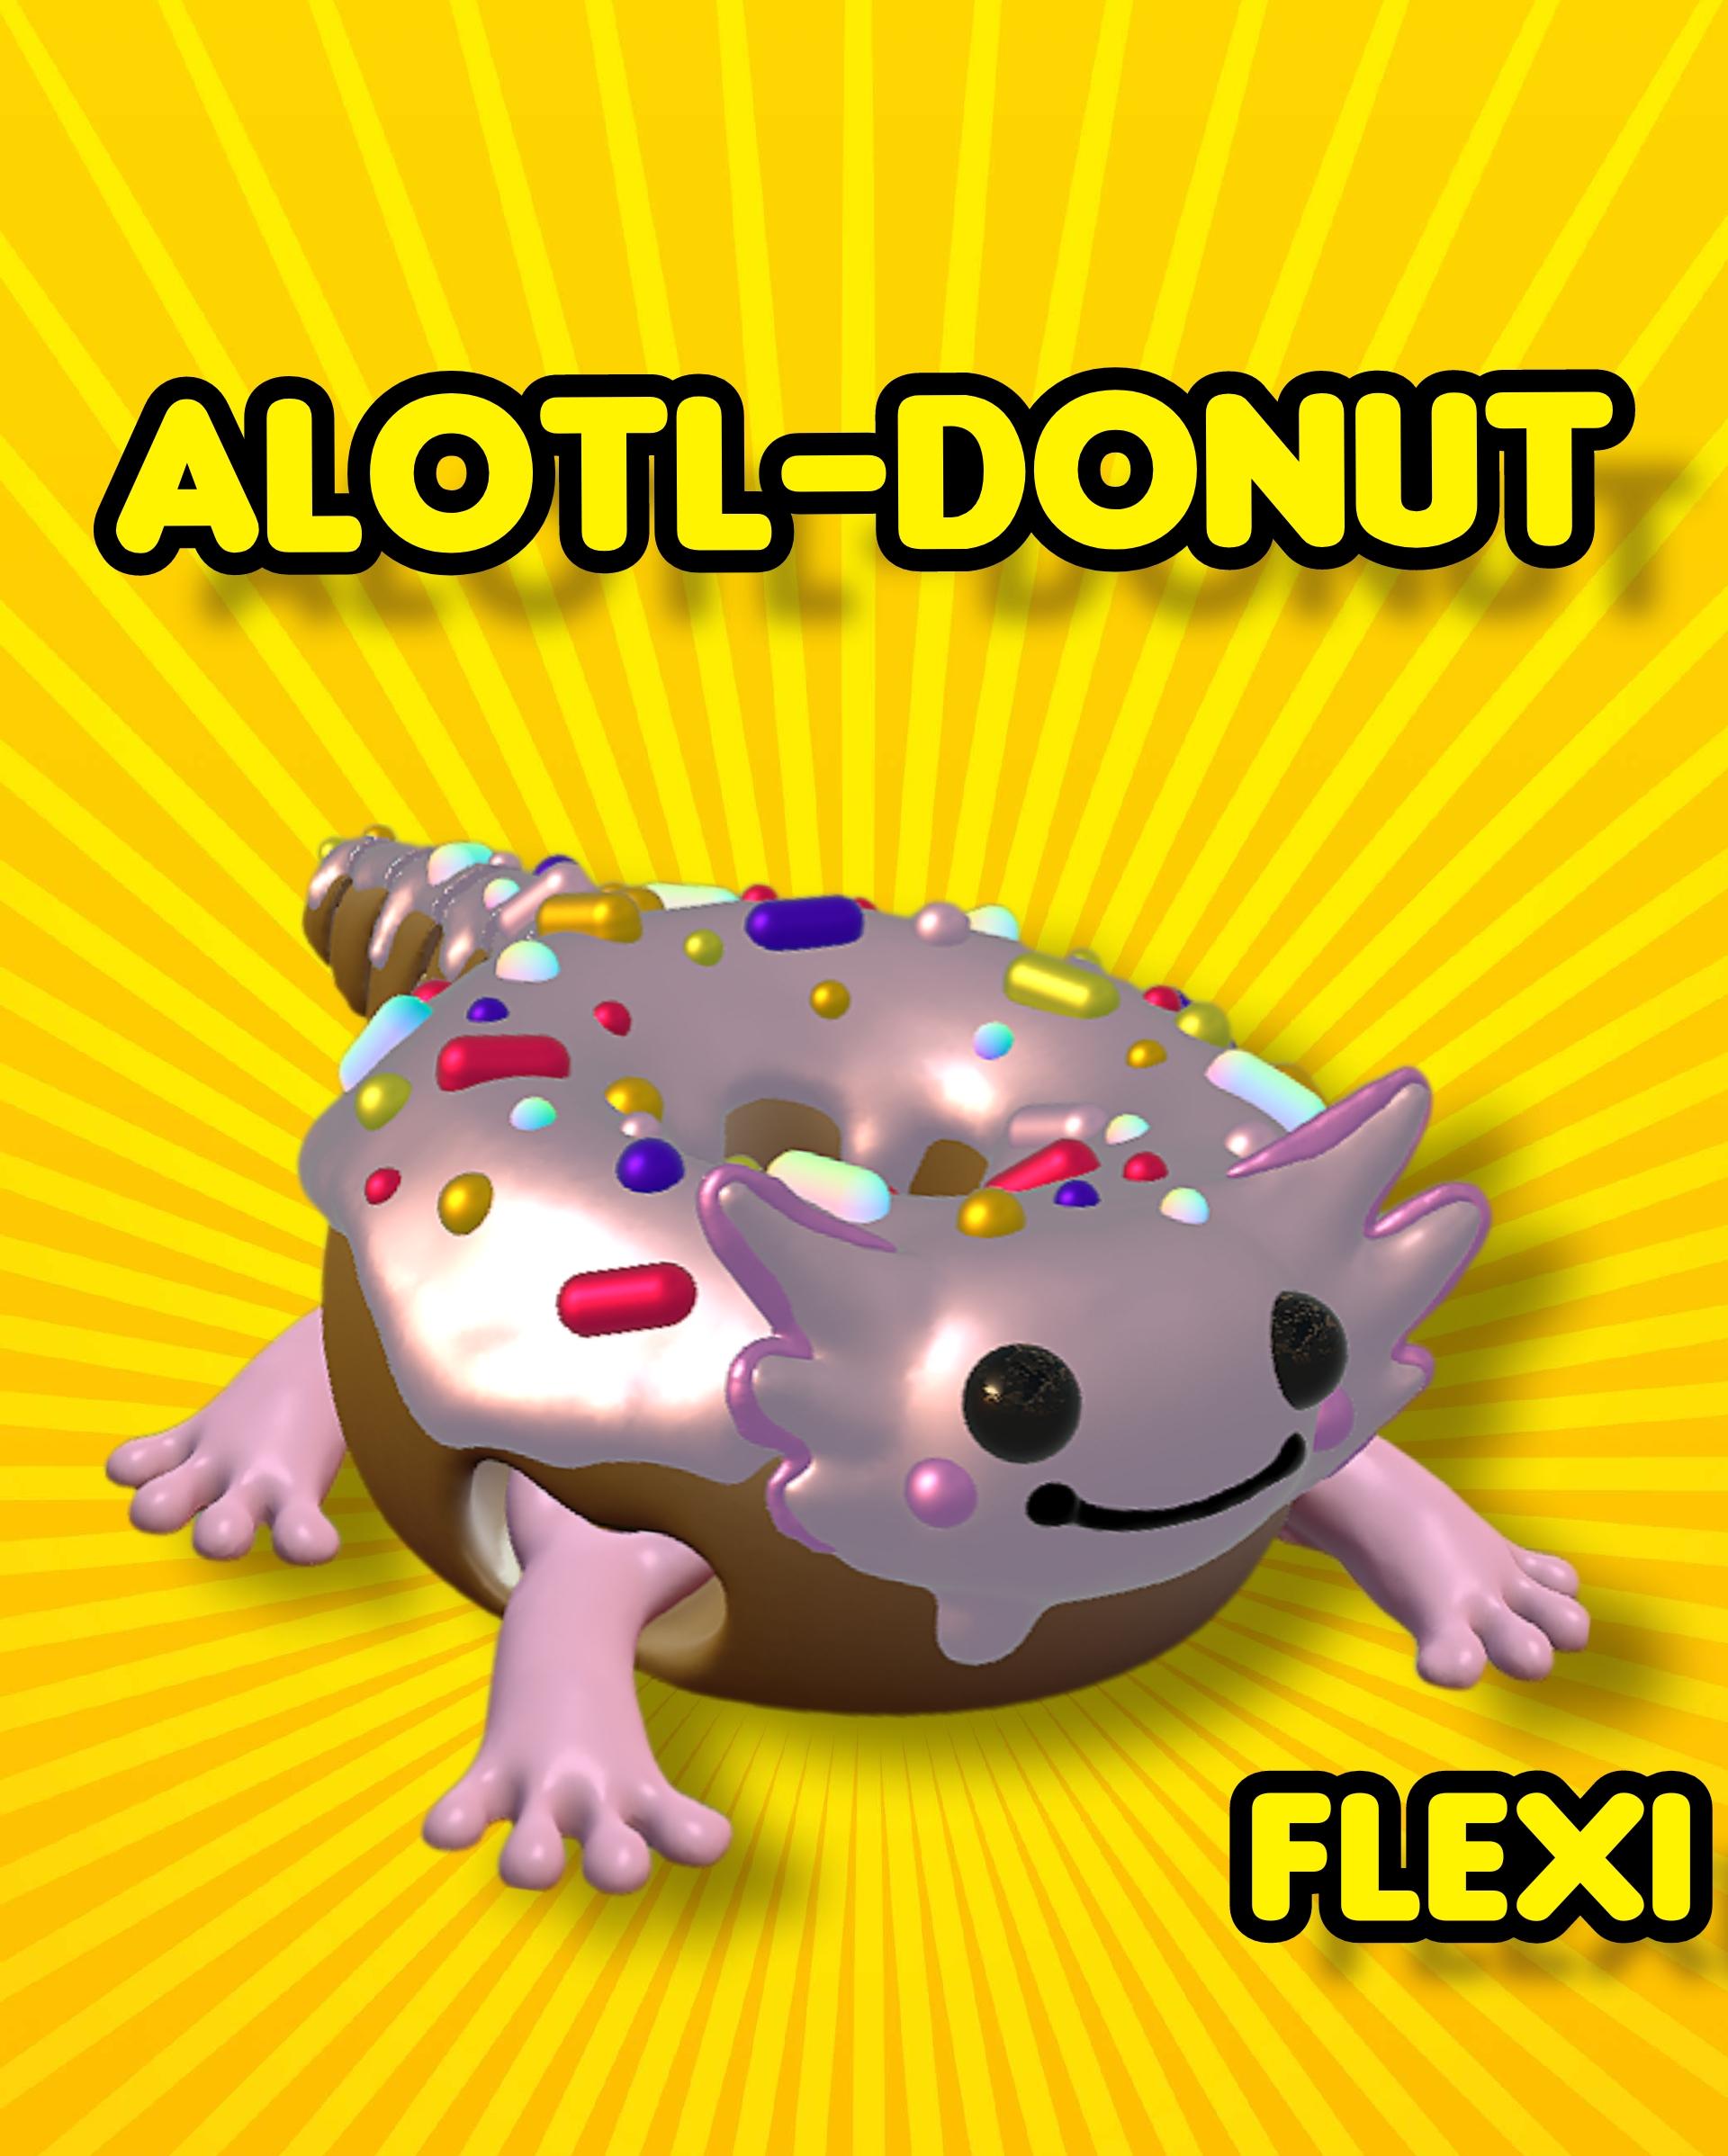 "Alotl-Donut" the Flexi Donut Axlotl 3d model